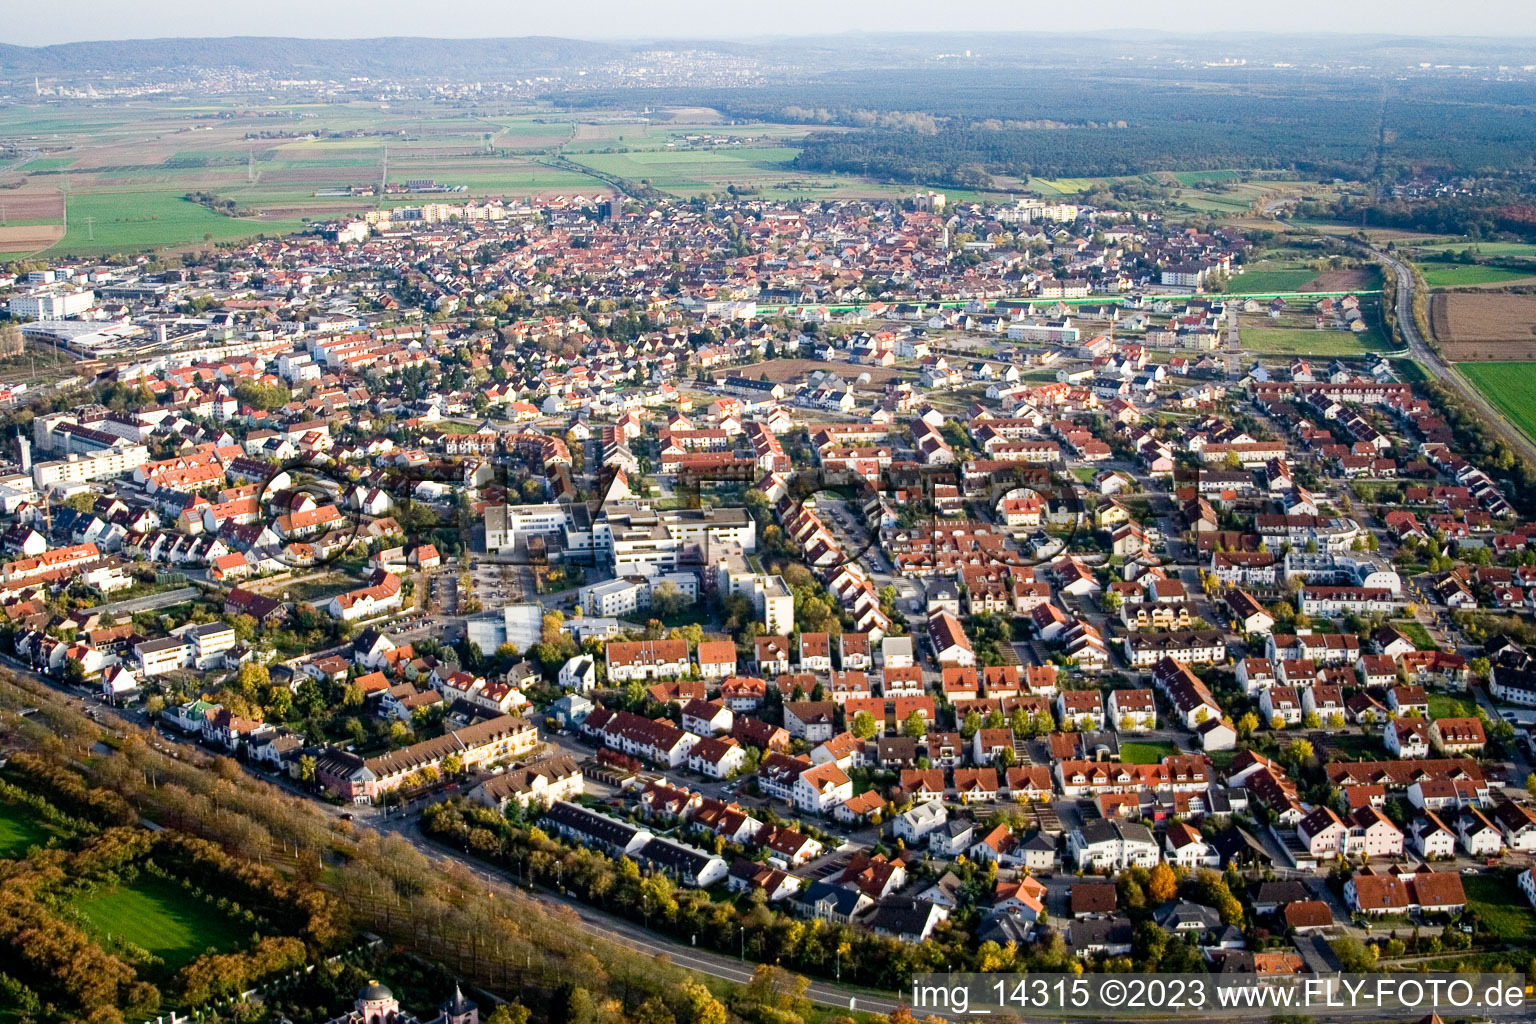 Oblique view of Schwetzingen in the state Baden-Wuerttemberg, Germany